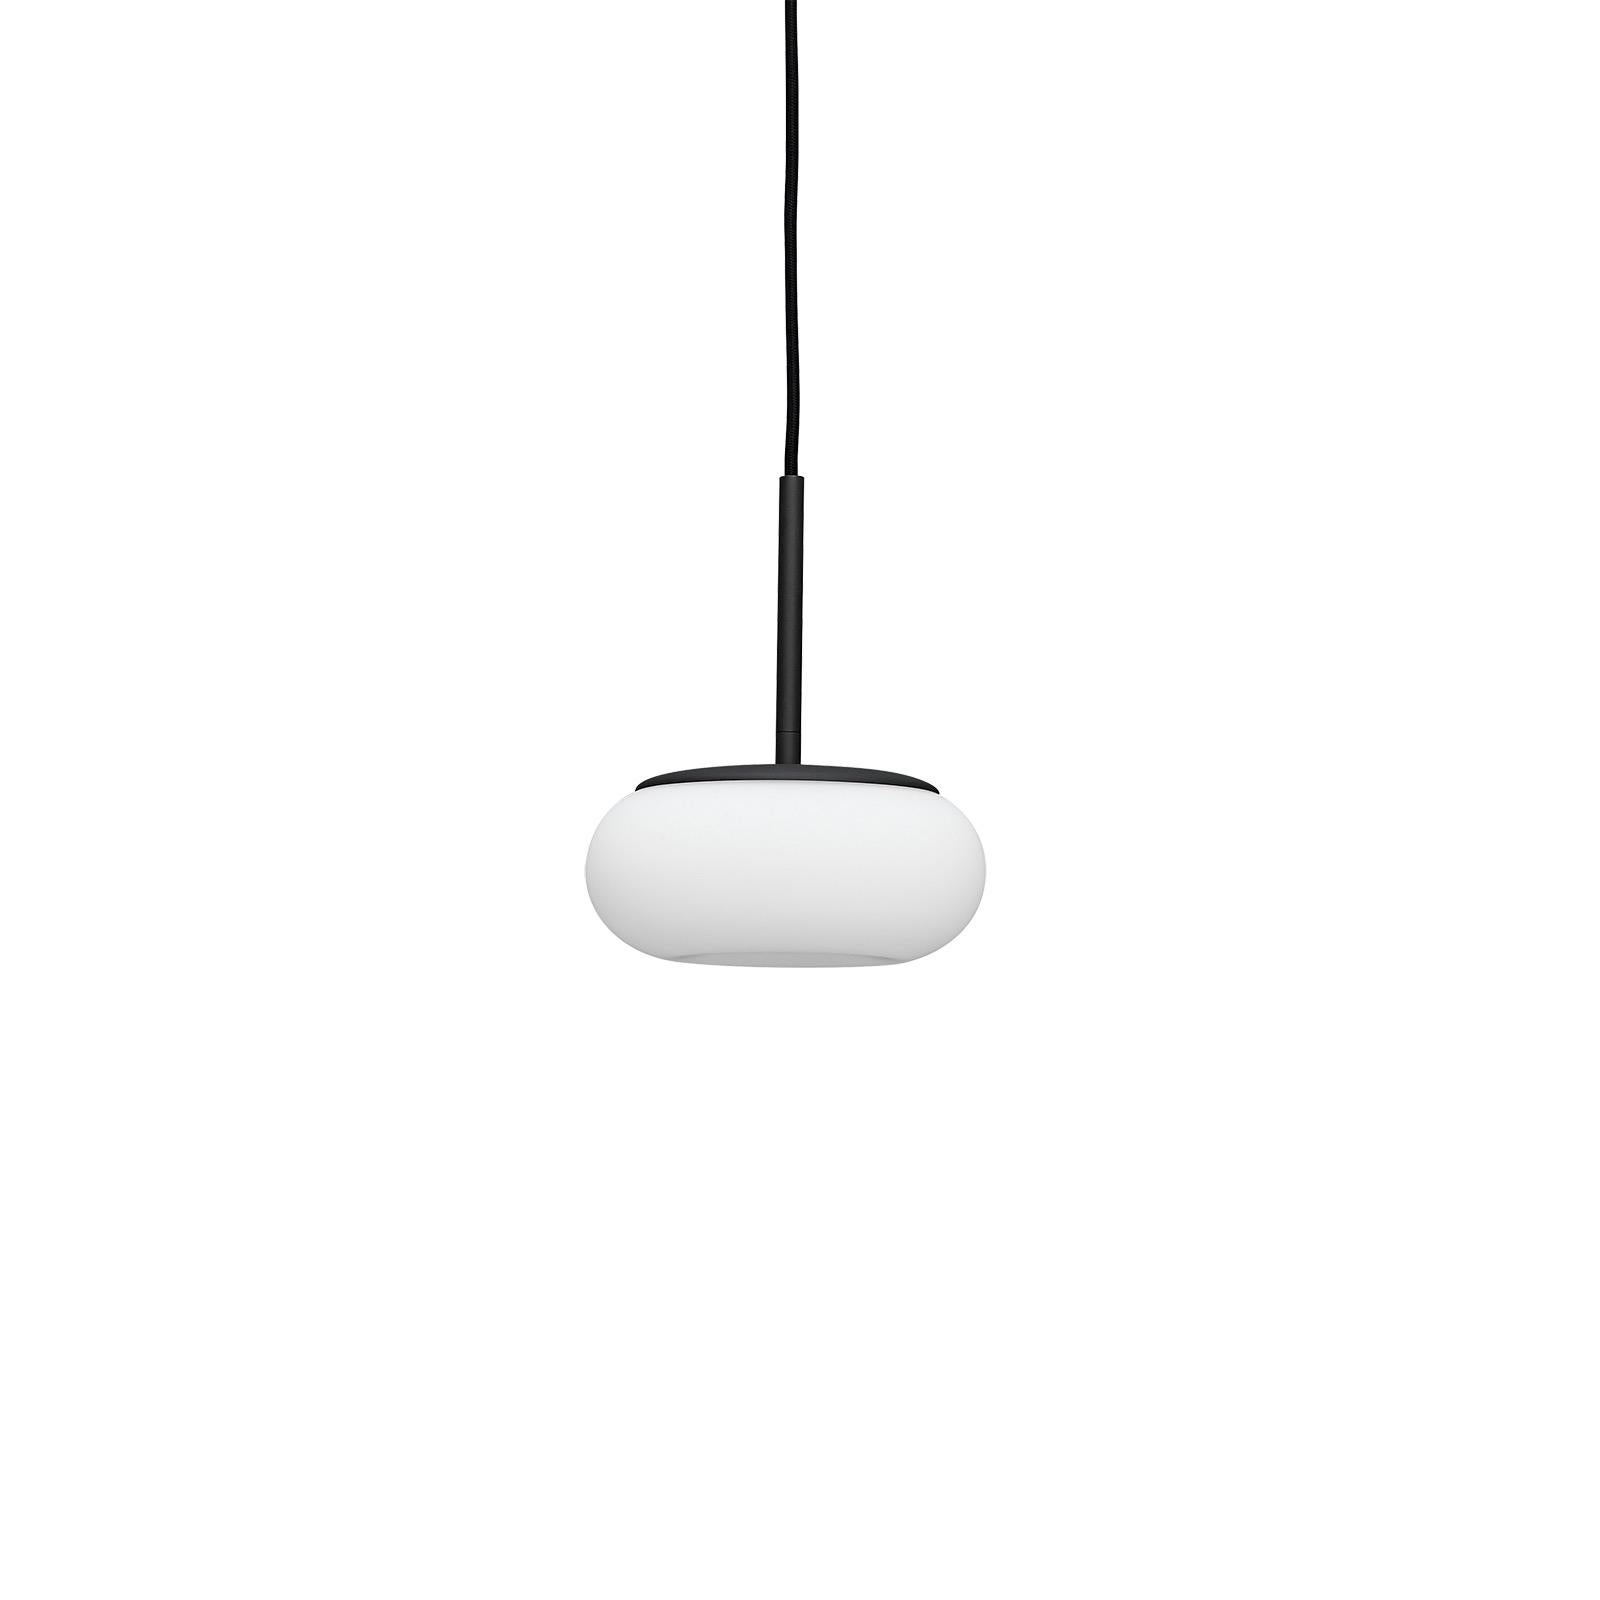 Korean Contemporary Pendant Lamp 'Mozzi' by ago 'Small - Grey' For Sale